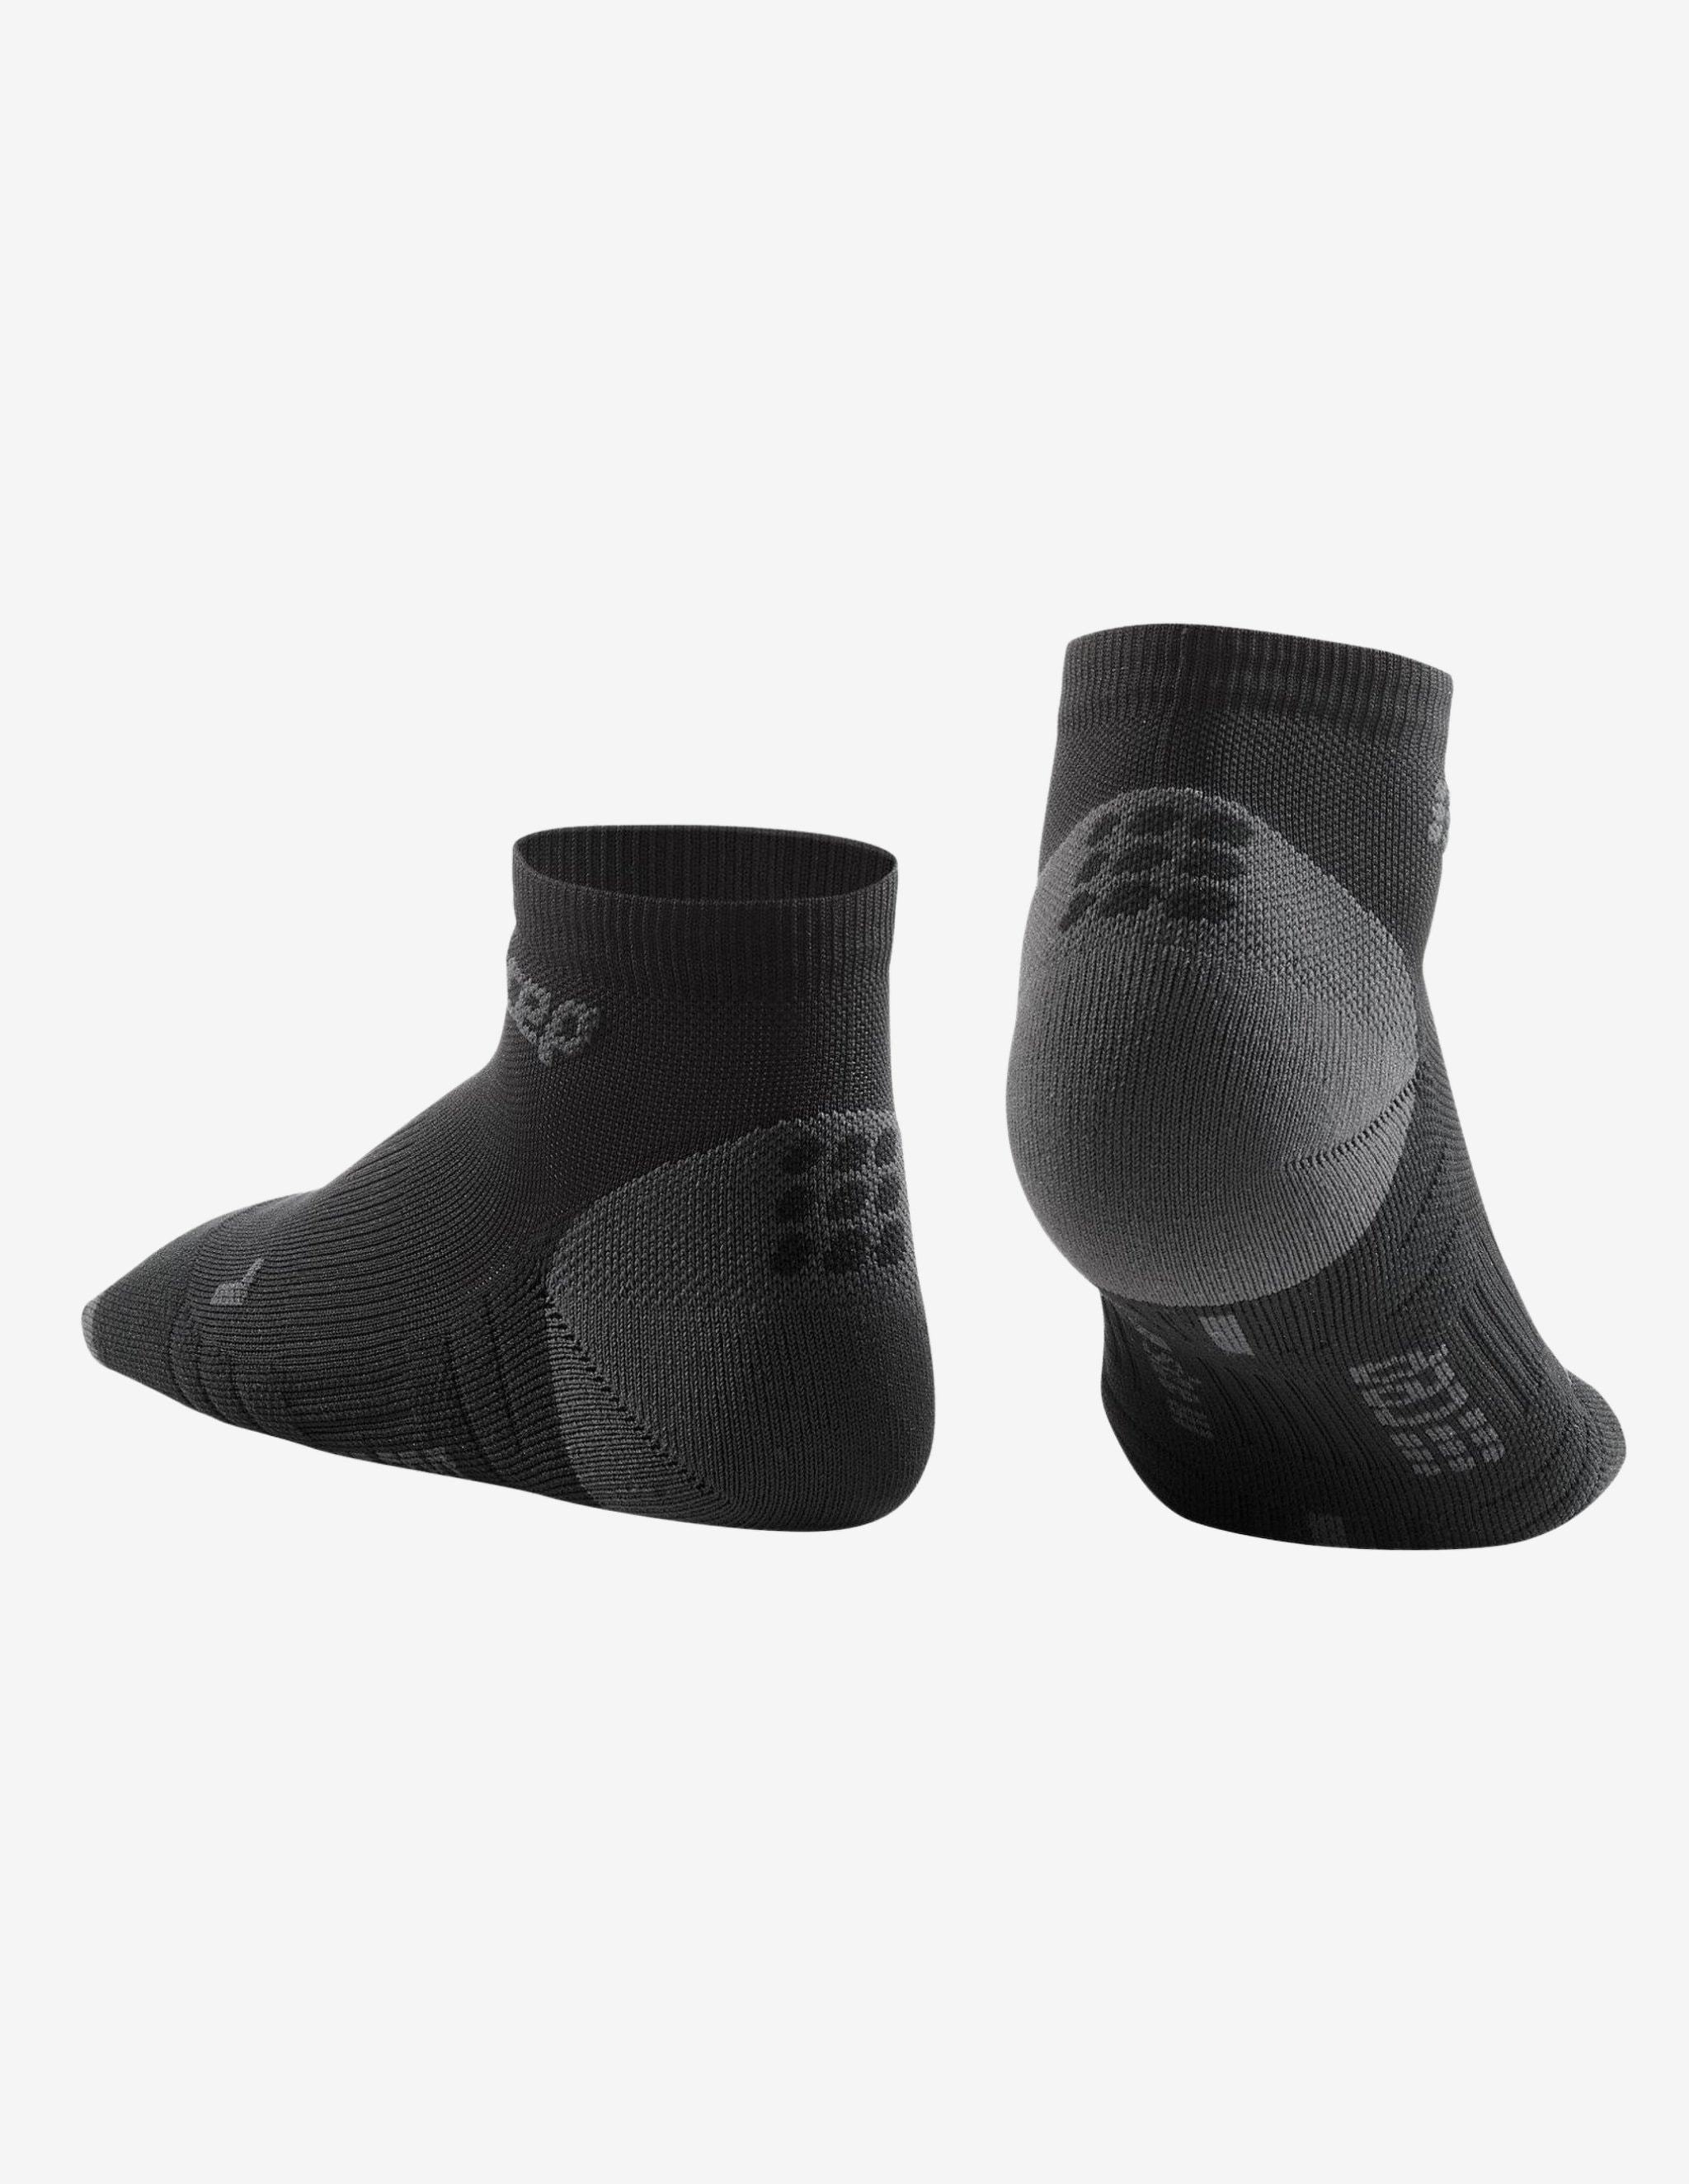 CEP Socks Low Cut 3.0 Black/Grey-Socks-CEP Compression-Guru Muscle